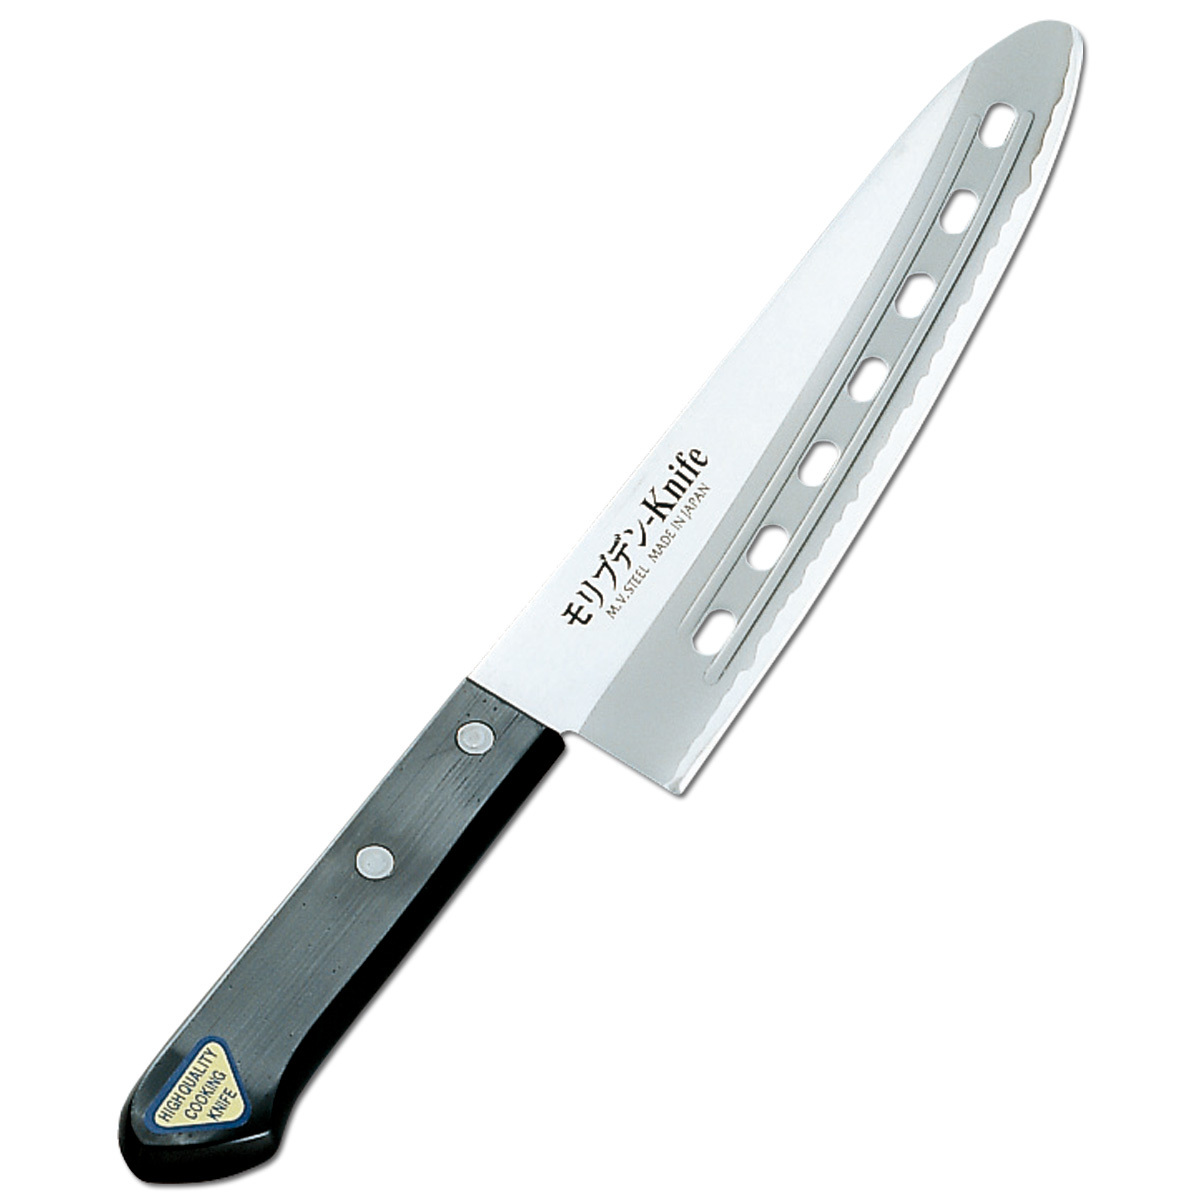 Нож Поварской Rasp Series 185 мм, сталь 420J2, Tojiro нож со сменным лезвием cold steel click n cut cs 40a сталь 420j2 рукоять пластик abs